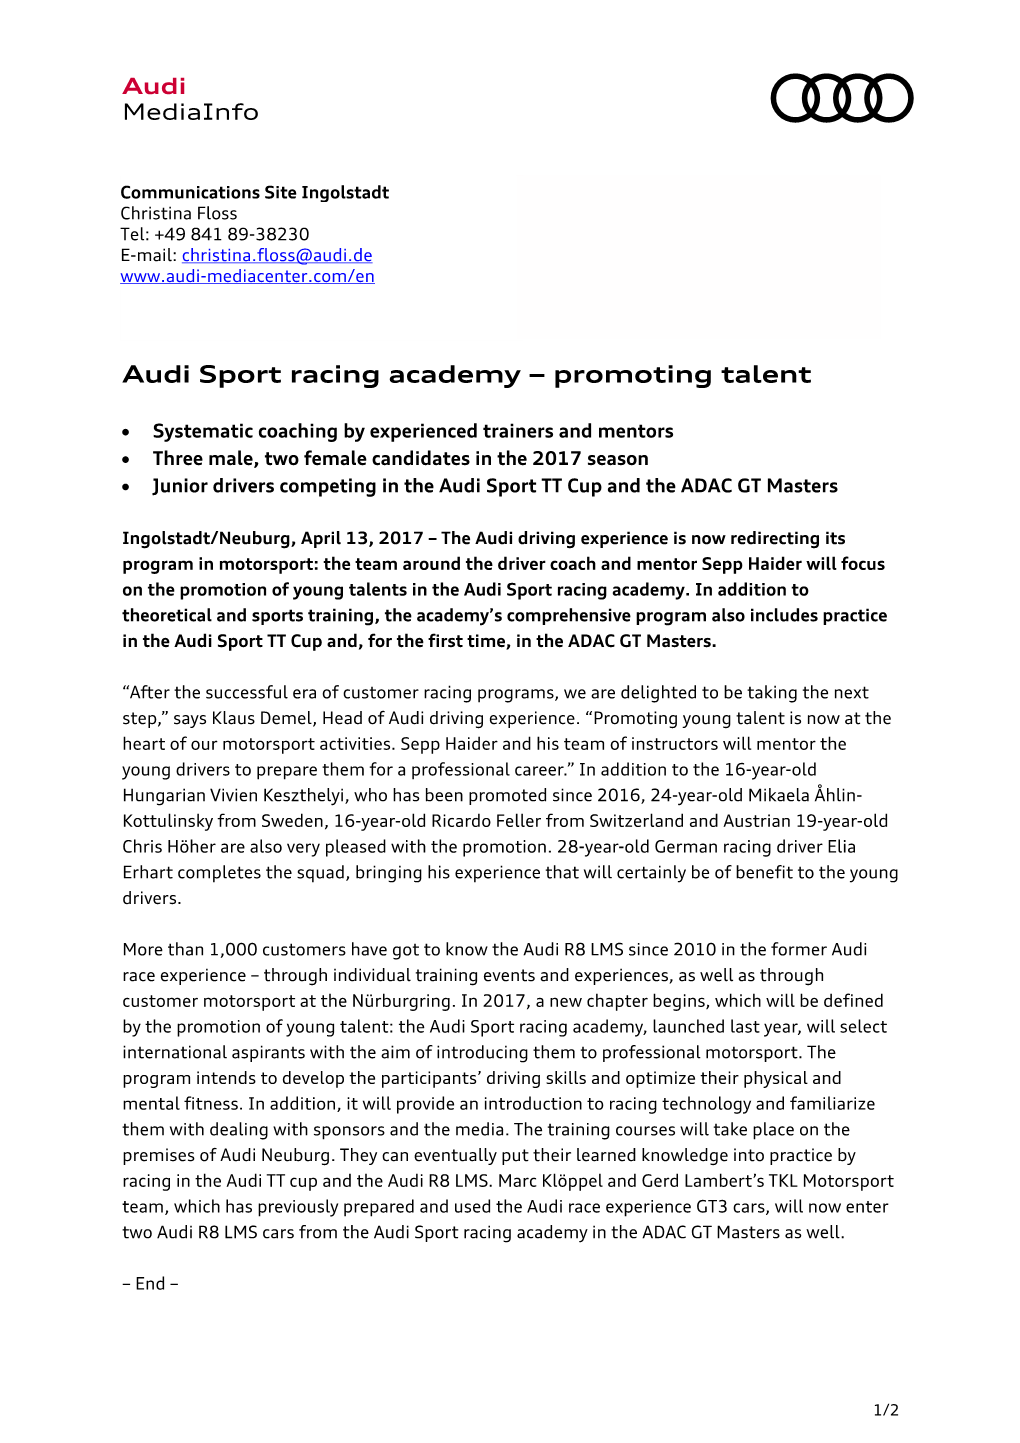 Audi Sport Racing Academy – Promoting Talent